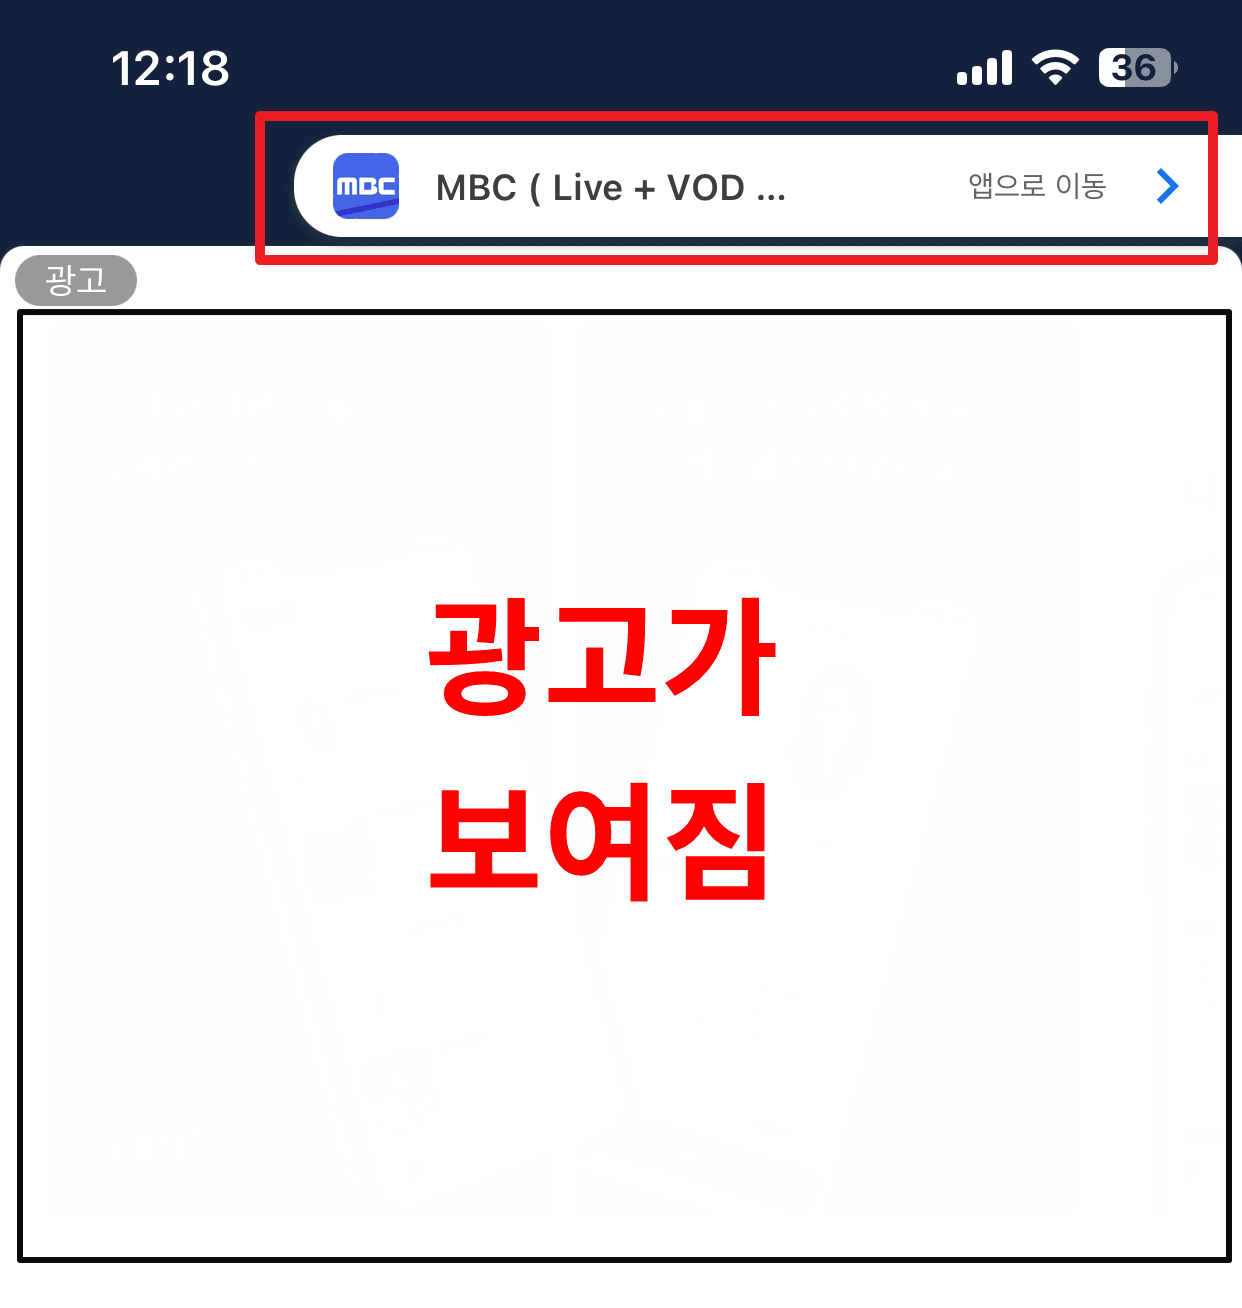 mbc 앱을 실행 시킨 후 빨간색 네모 부분을 눌러야 mbc 실시간 tv 보기가 가능한 앱으로 이동이 됩니다.